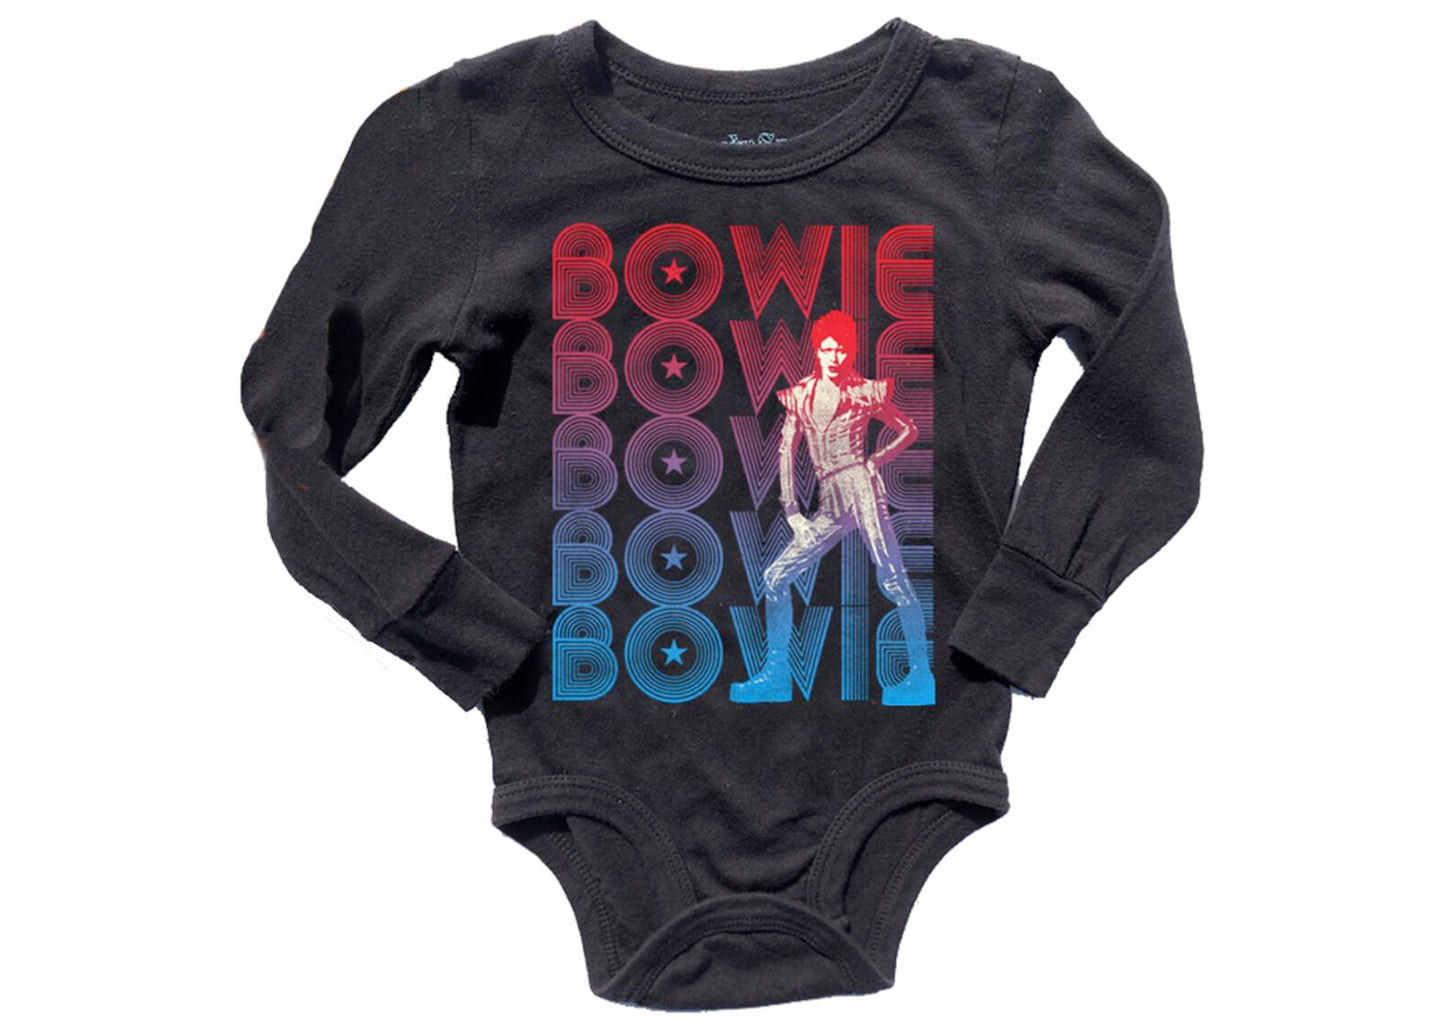 David Bowie Glam Star Long Sleeve Baby Onesie